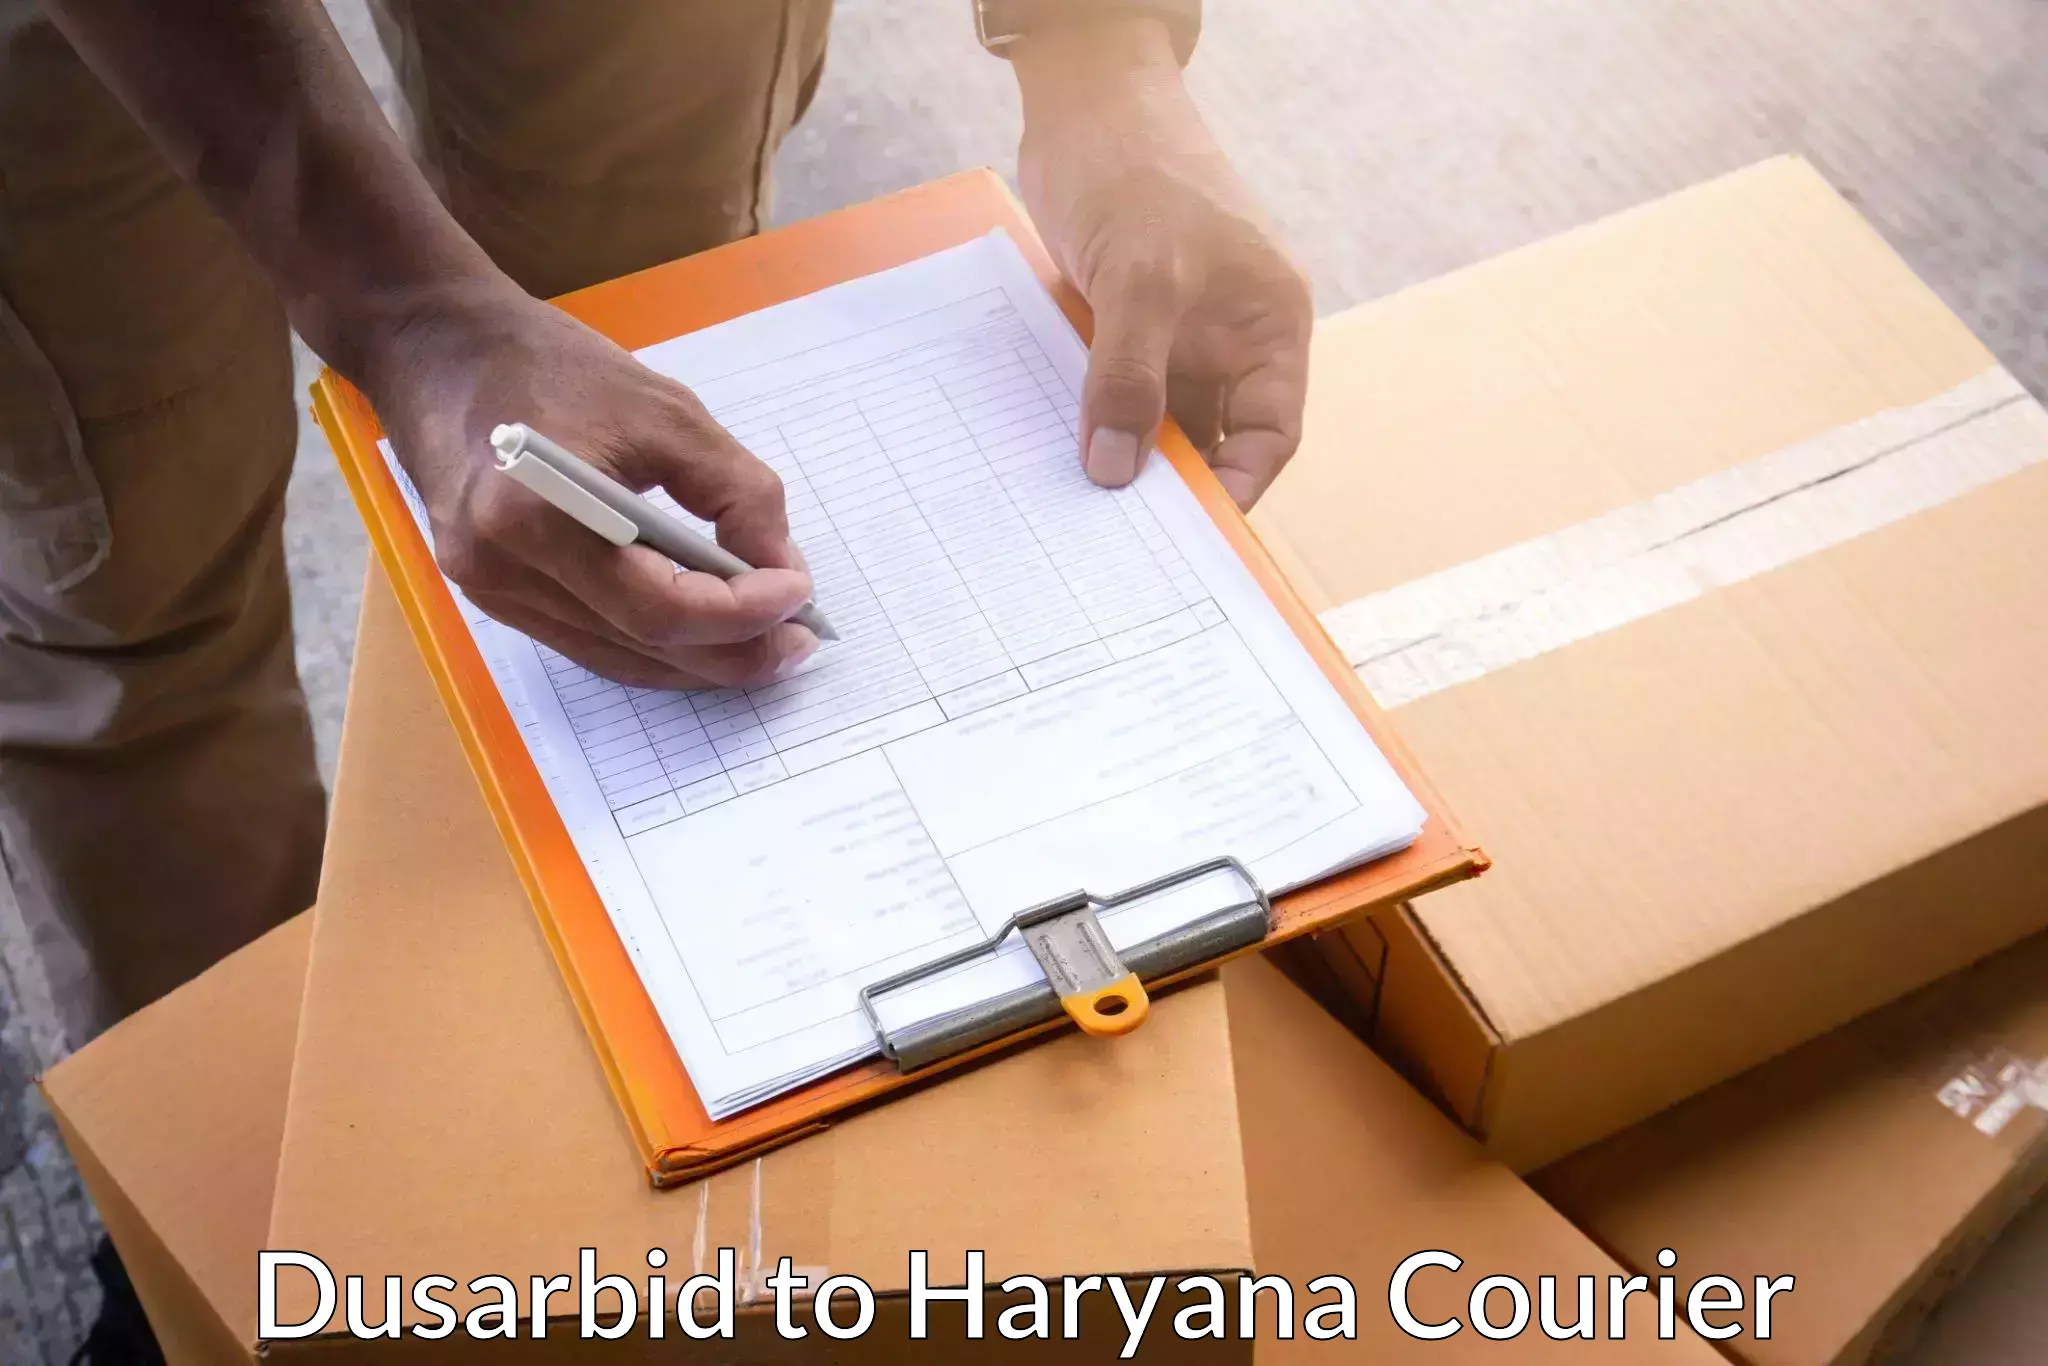 Courier service comparison Dusarbid to Gurgaon